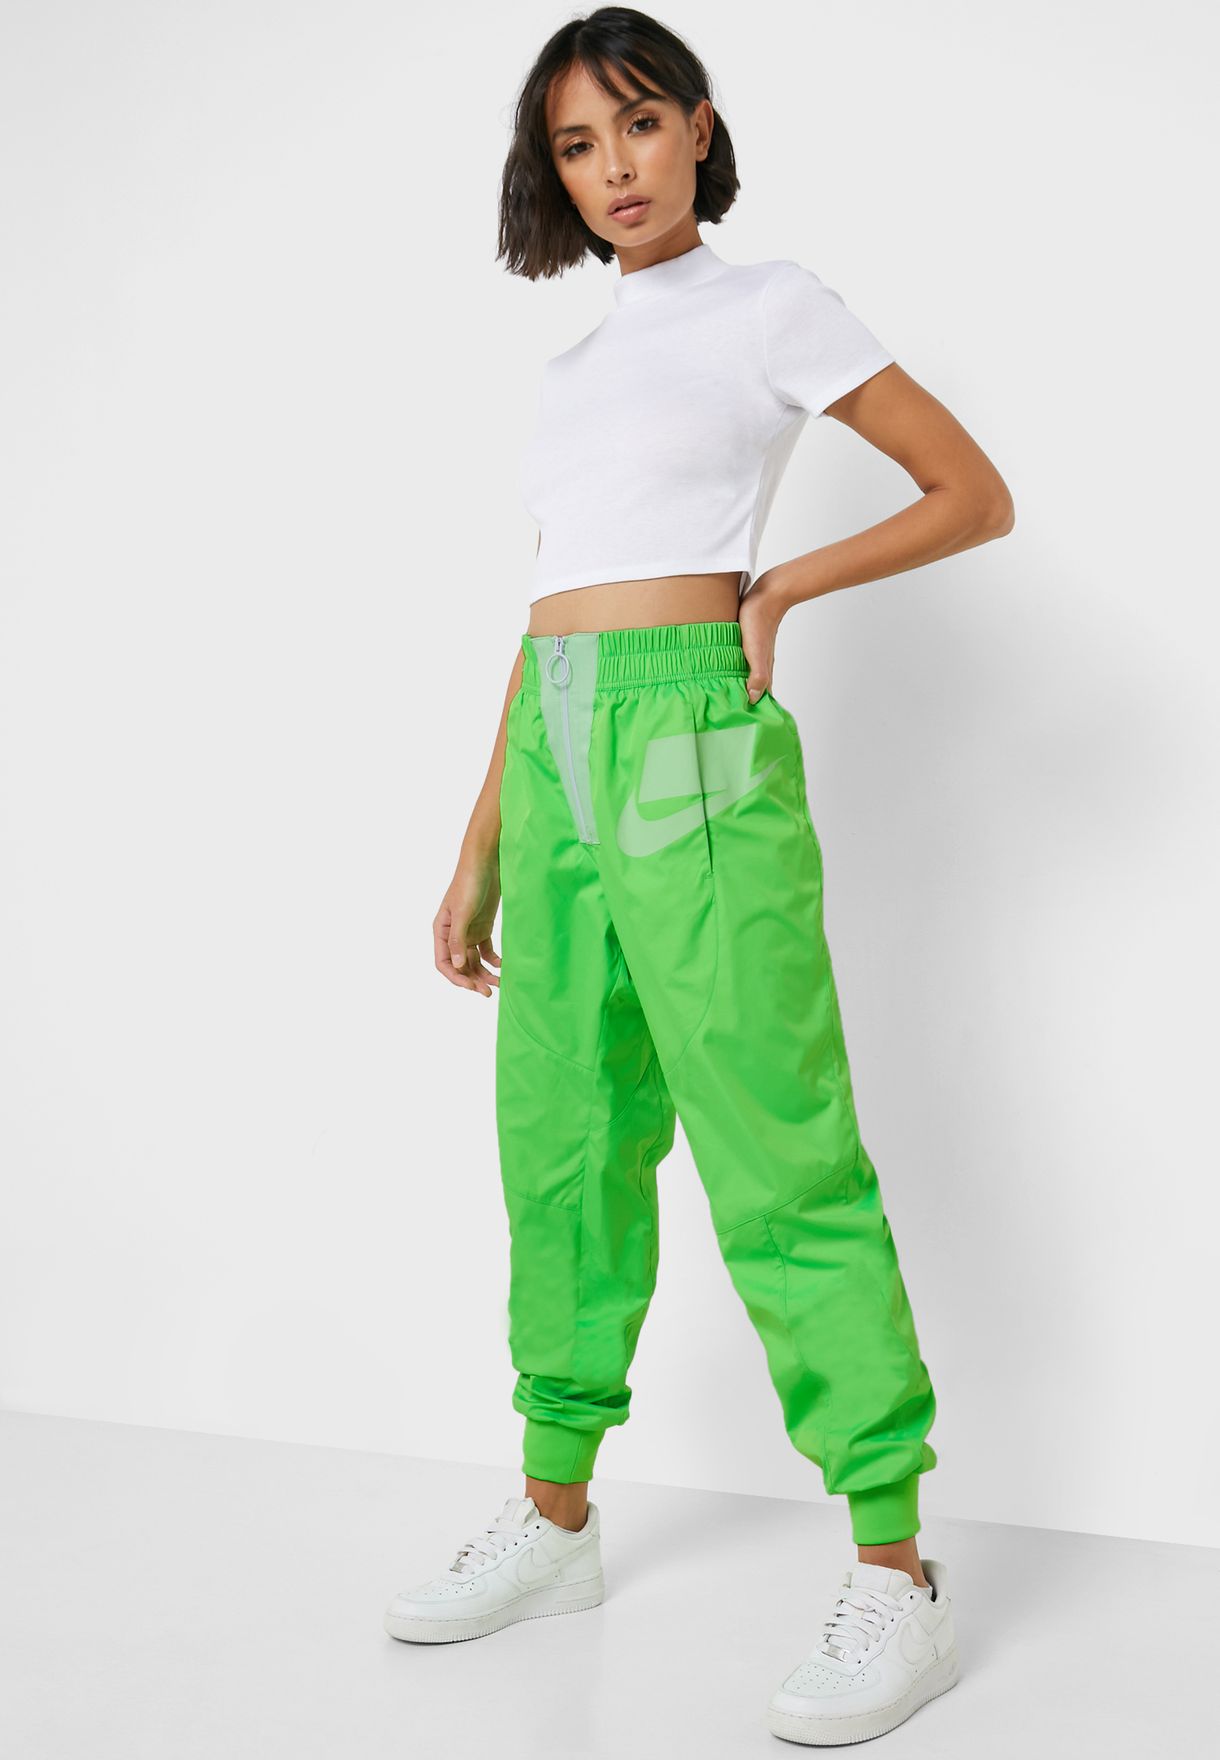 nike neon green pants